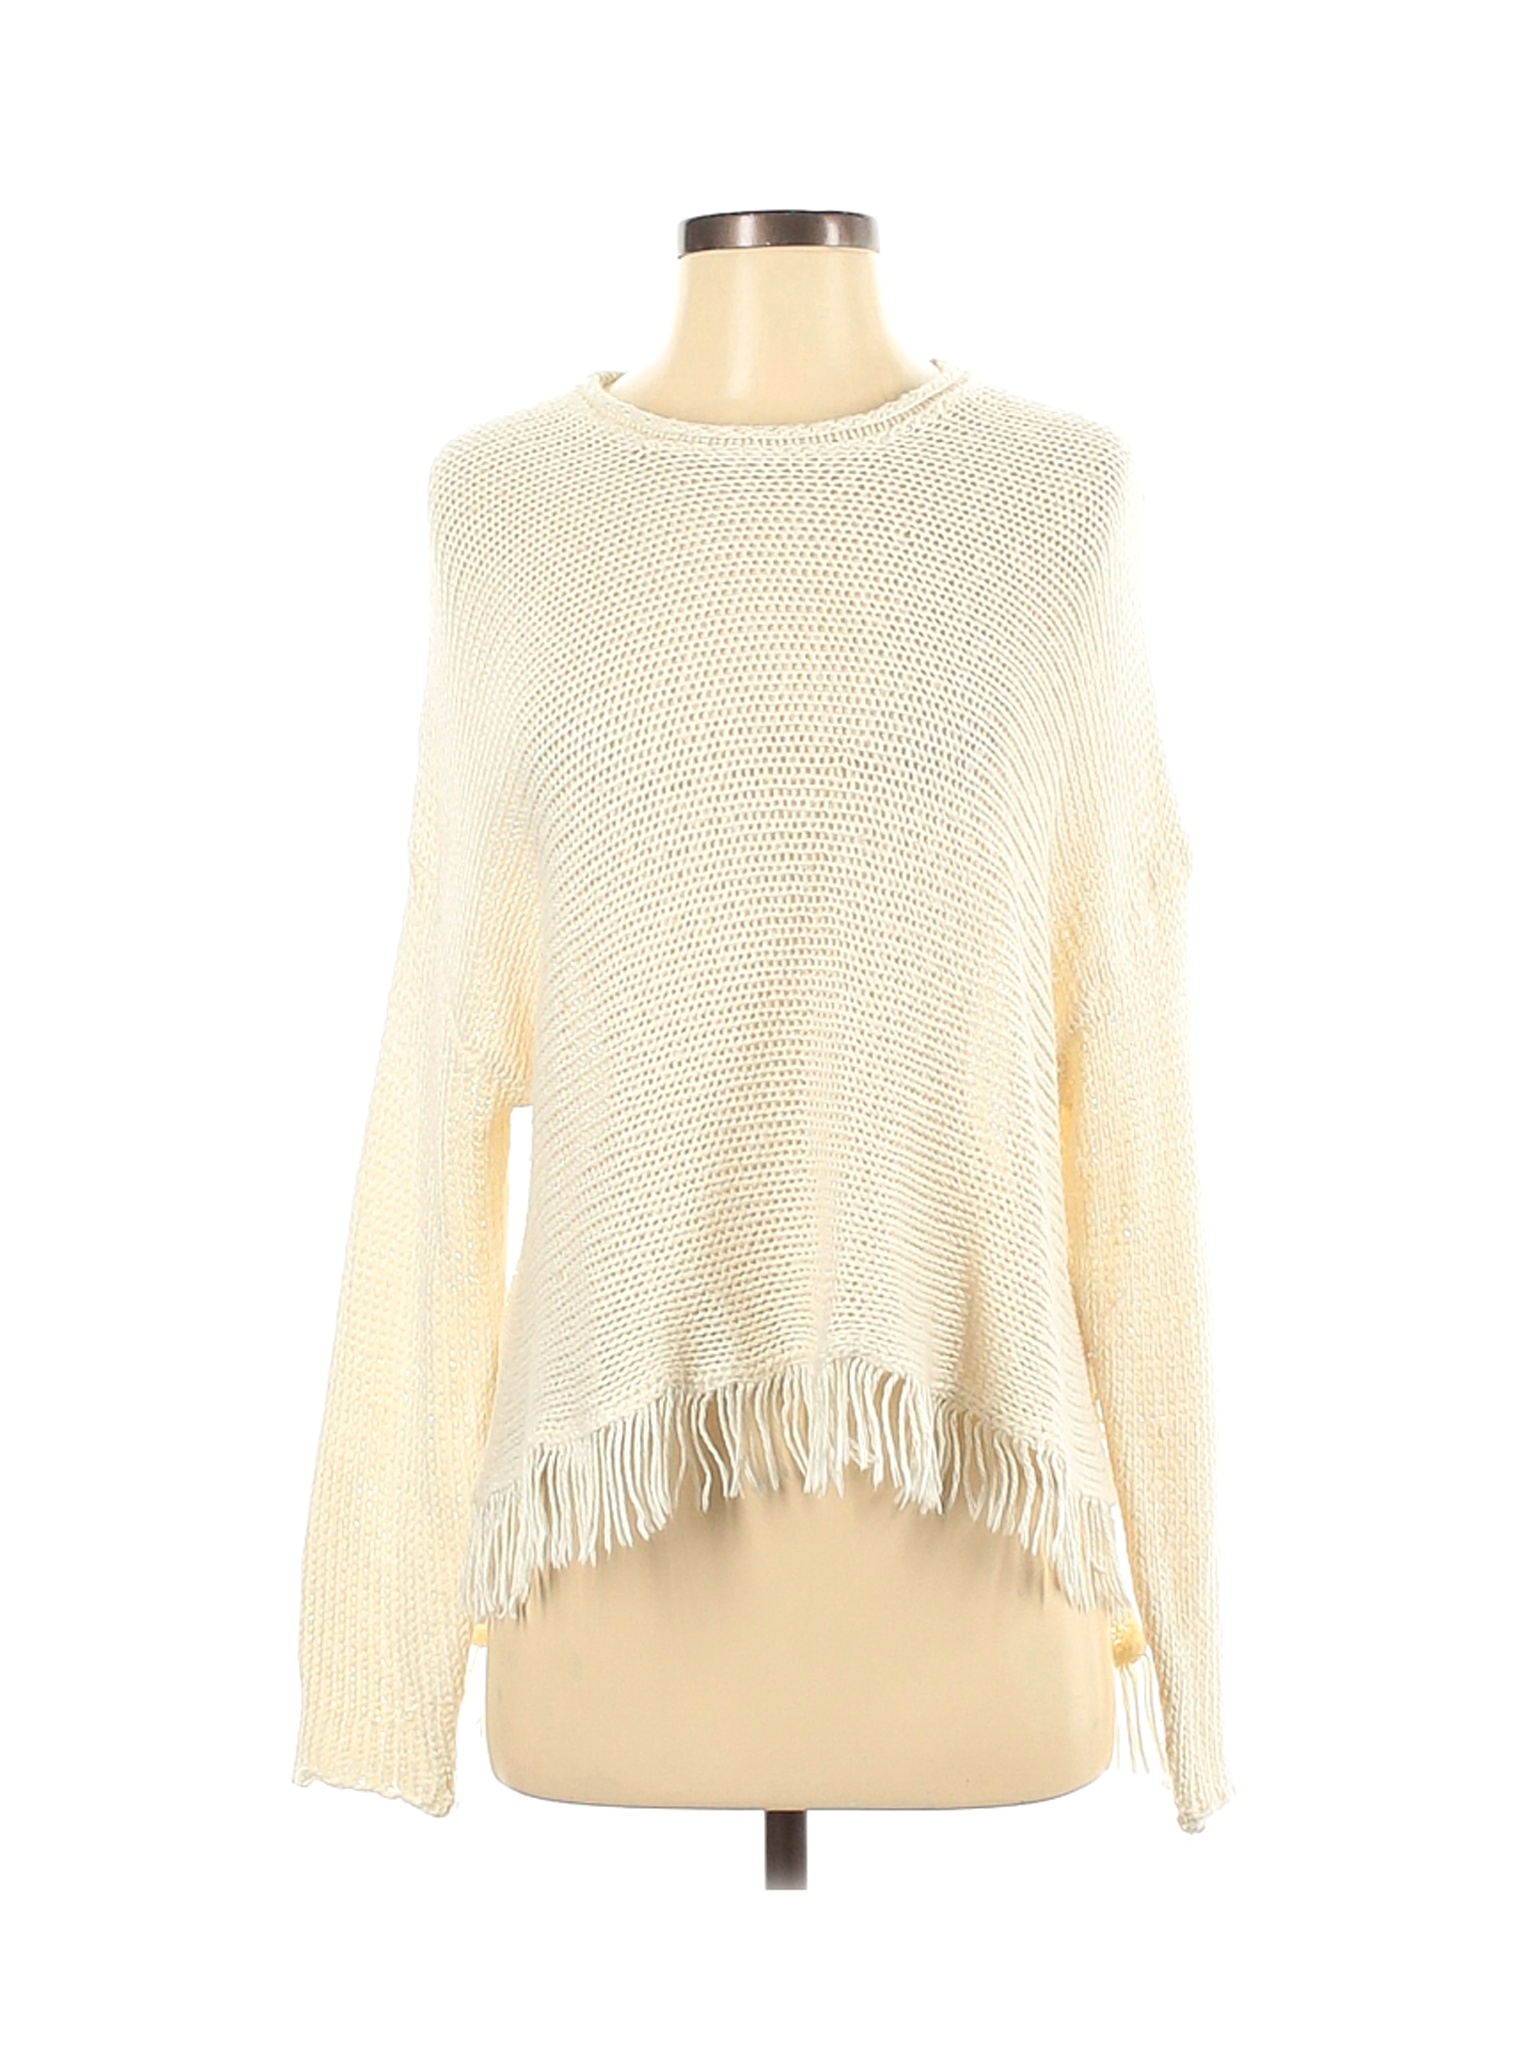 Show Me Your Mumu Women Ivory Pullover Sweater S | eBay